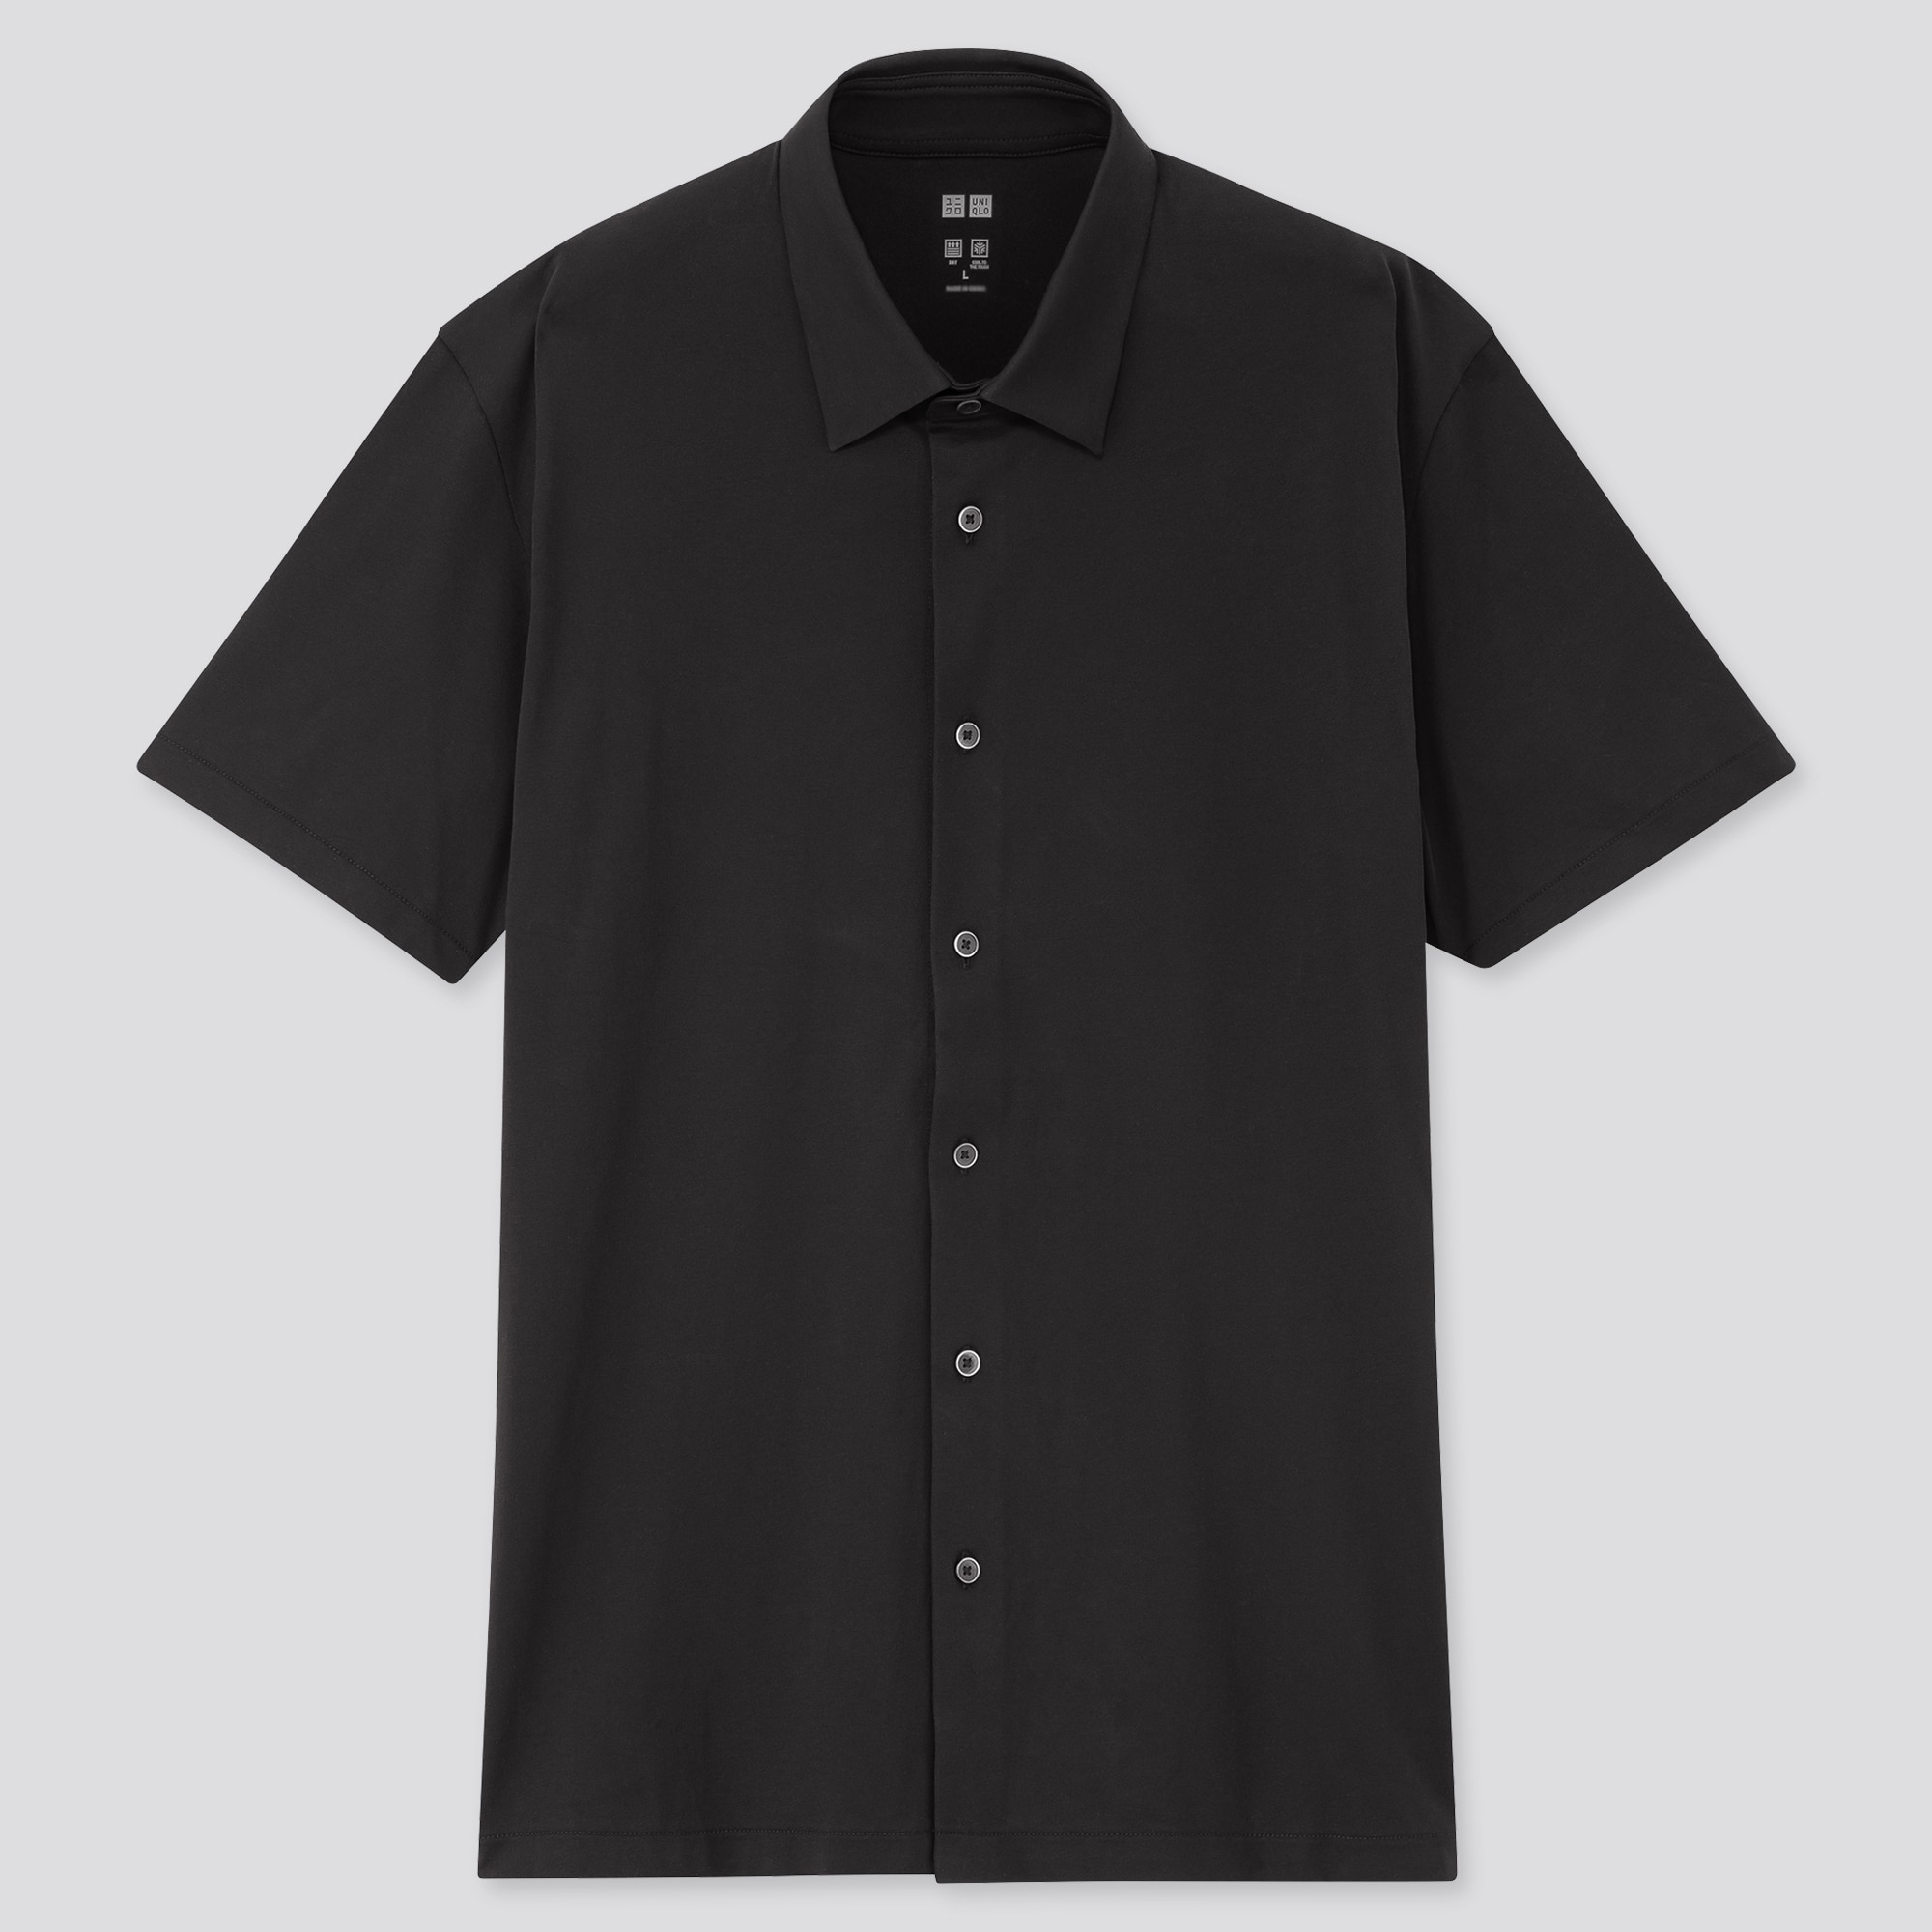 black short sleeve polo shirt